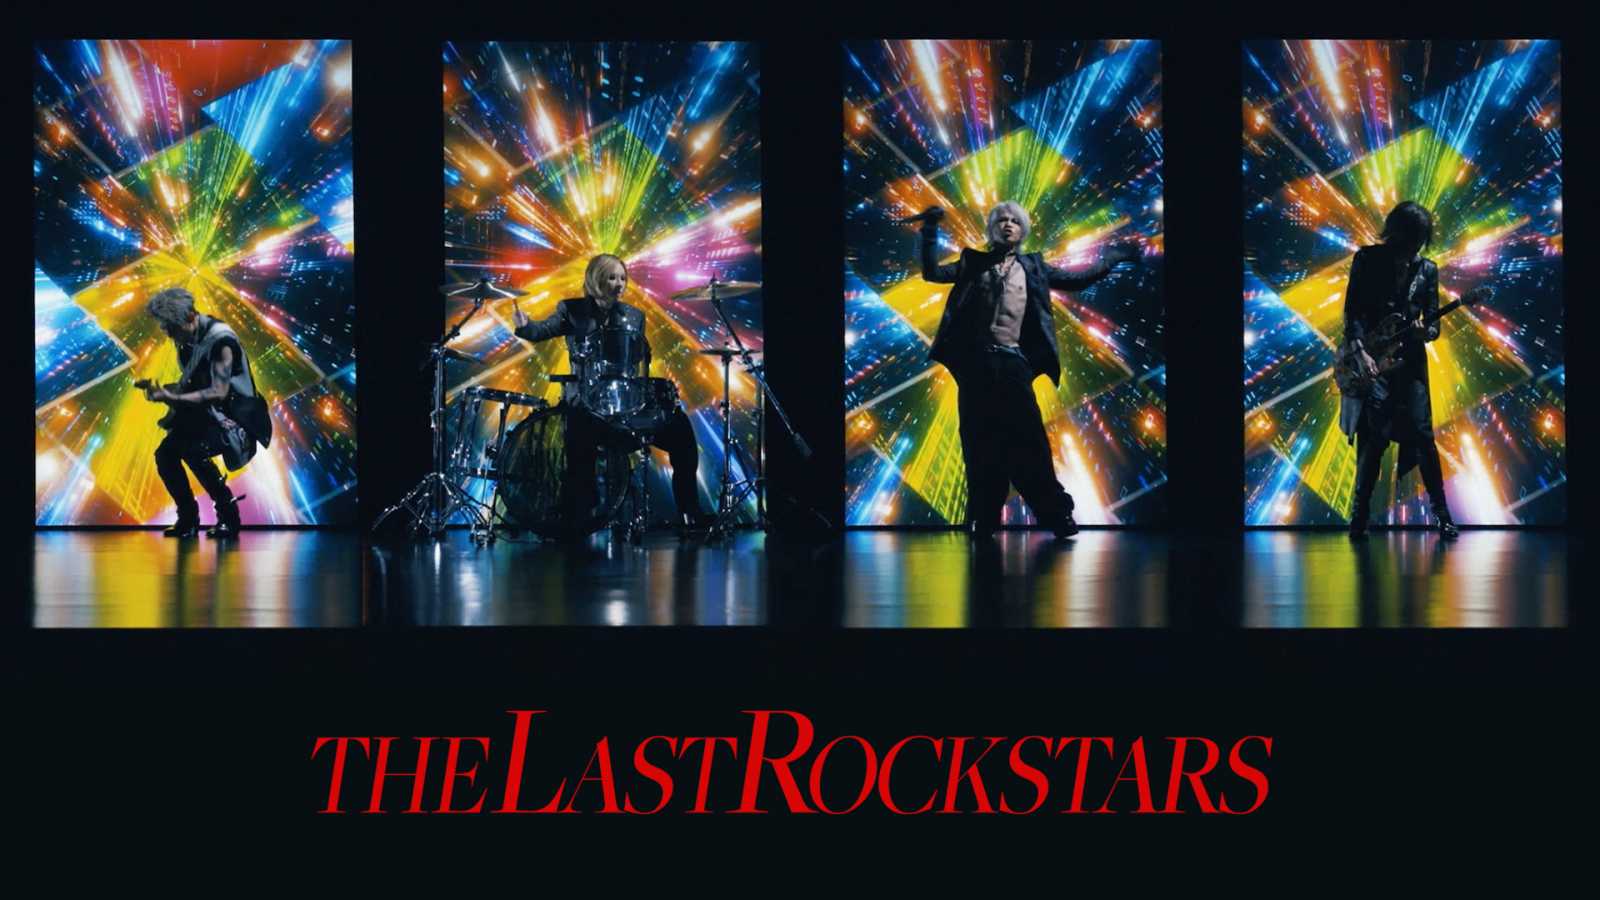 THE LAST ROCKSTARS udostępnił teledysk do "The Last Rockstars (Paris Mix)" © THE LAST ROCKSTARS. All rights reserved.